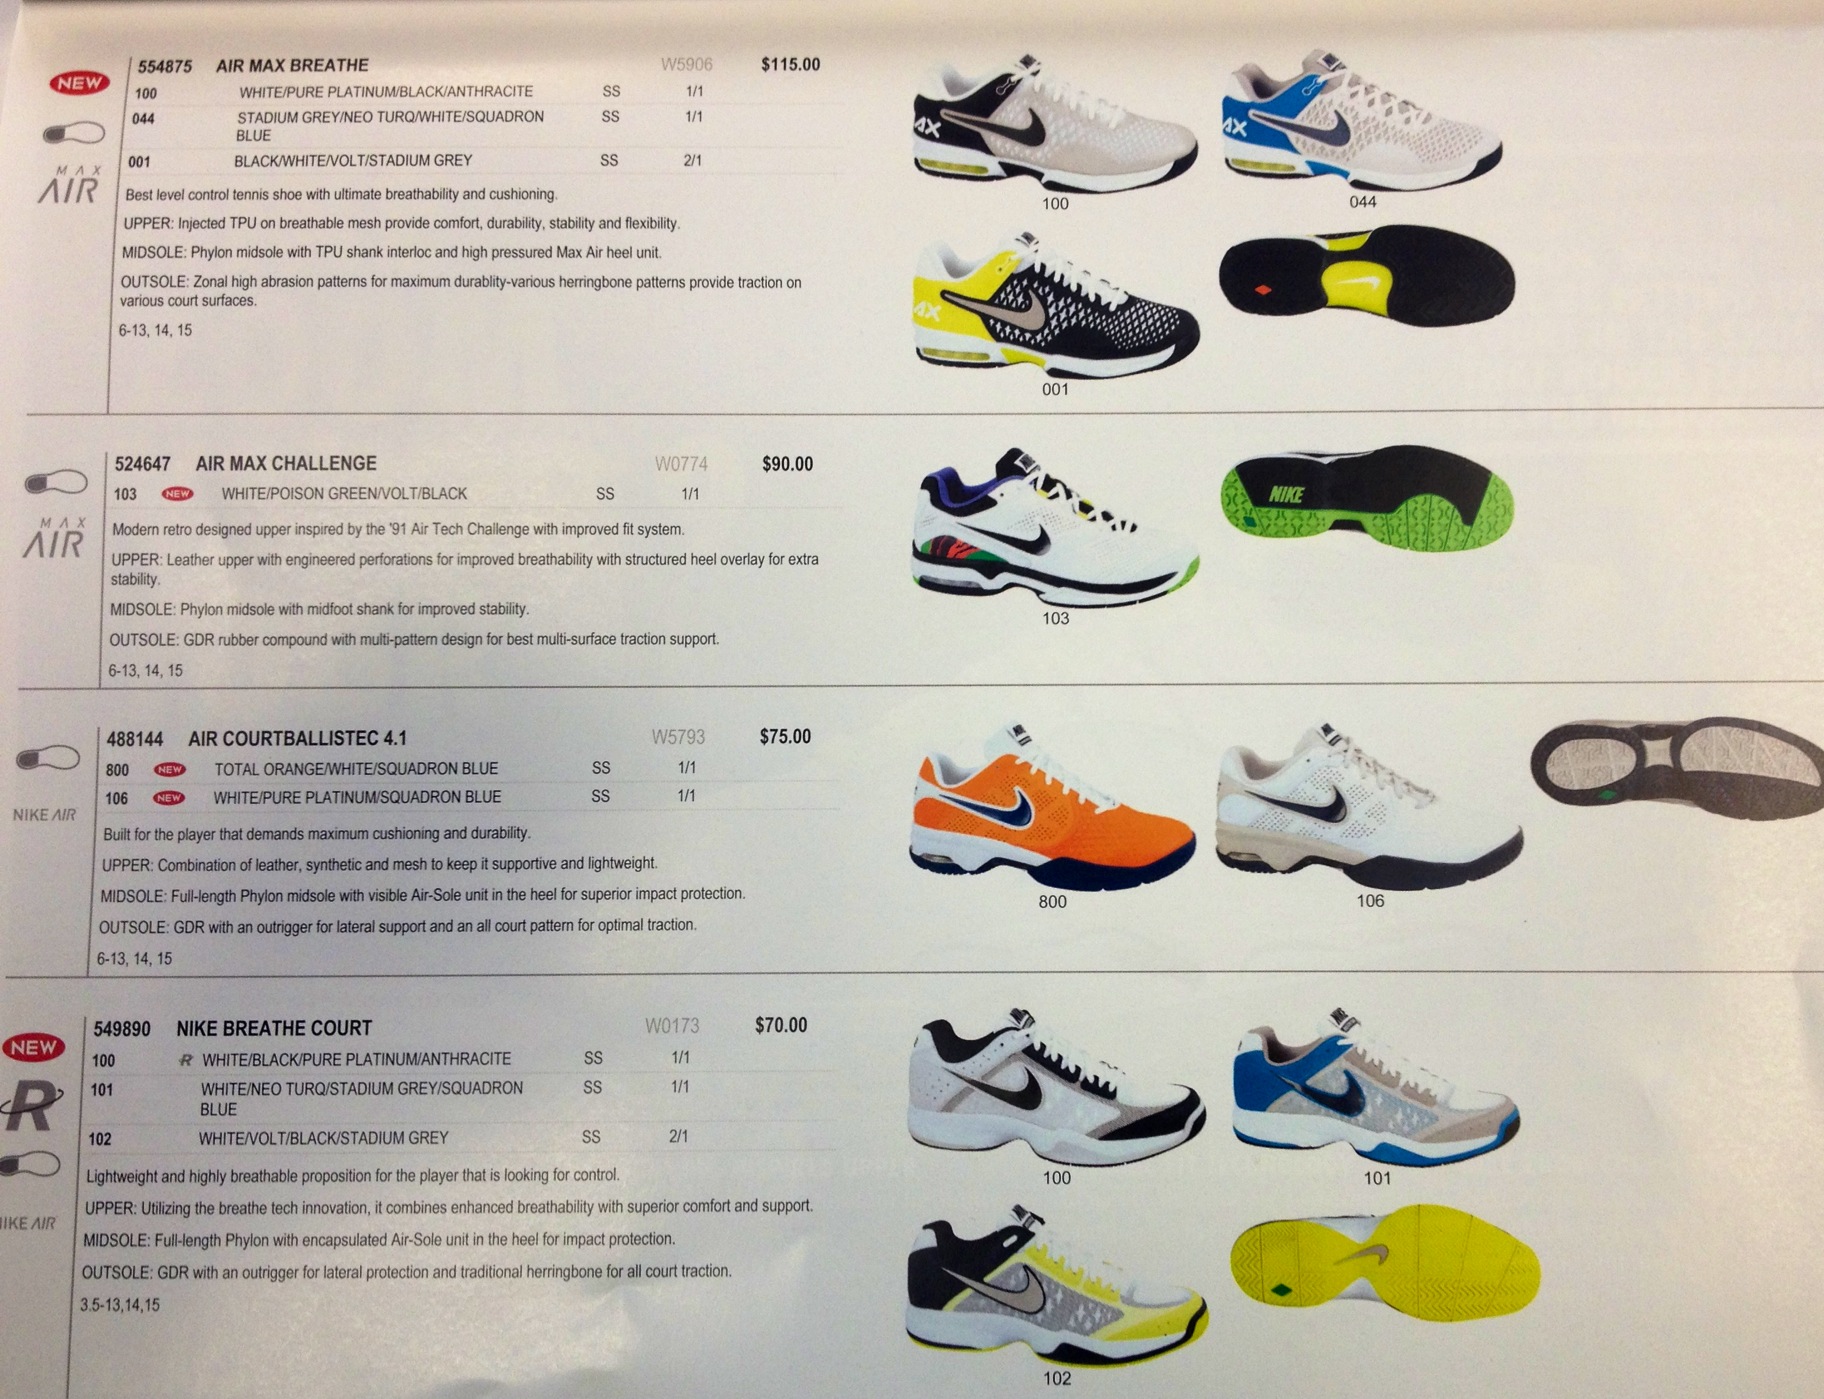 Official Nike Tennis Thread | Page 15 | NikeTalk